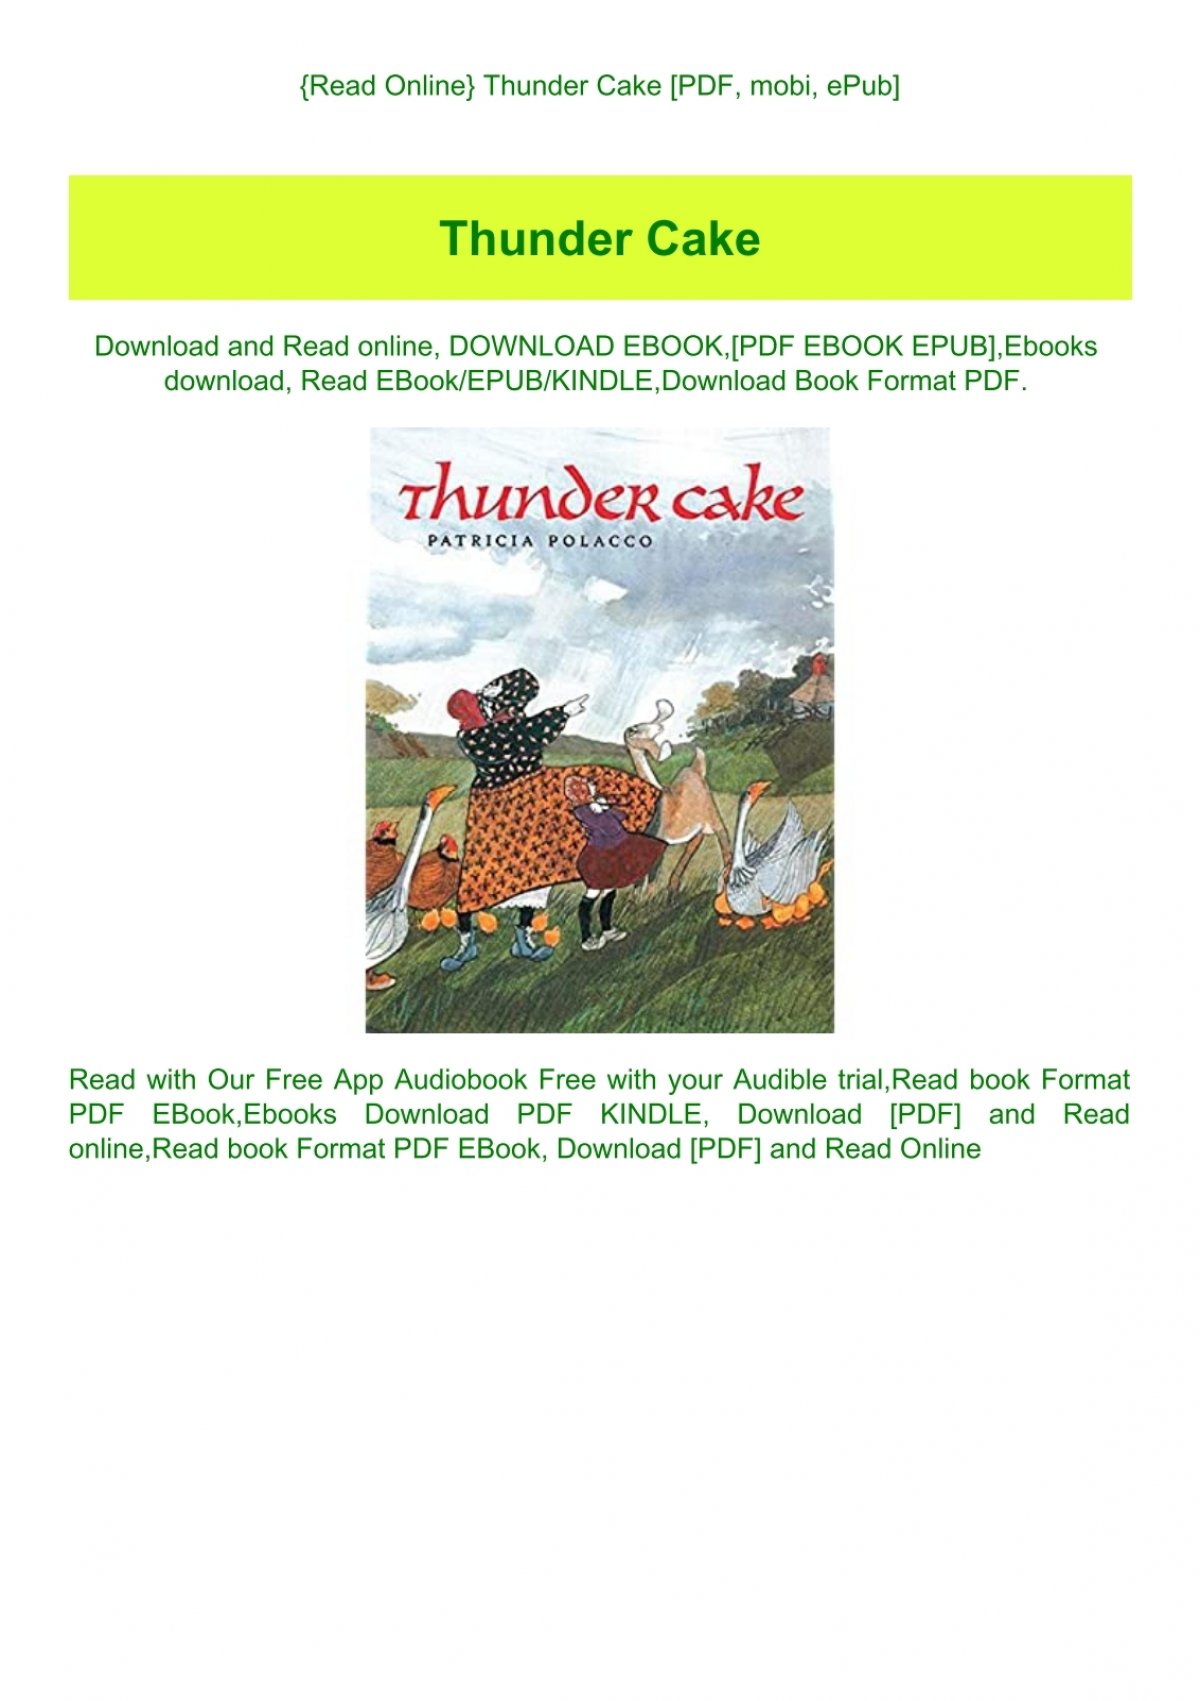 3 Layer Chocolate Thunder Cake (Case) - Sweet Street Desserts Wholesale